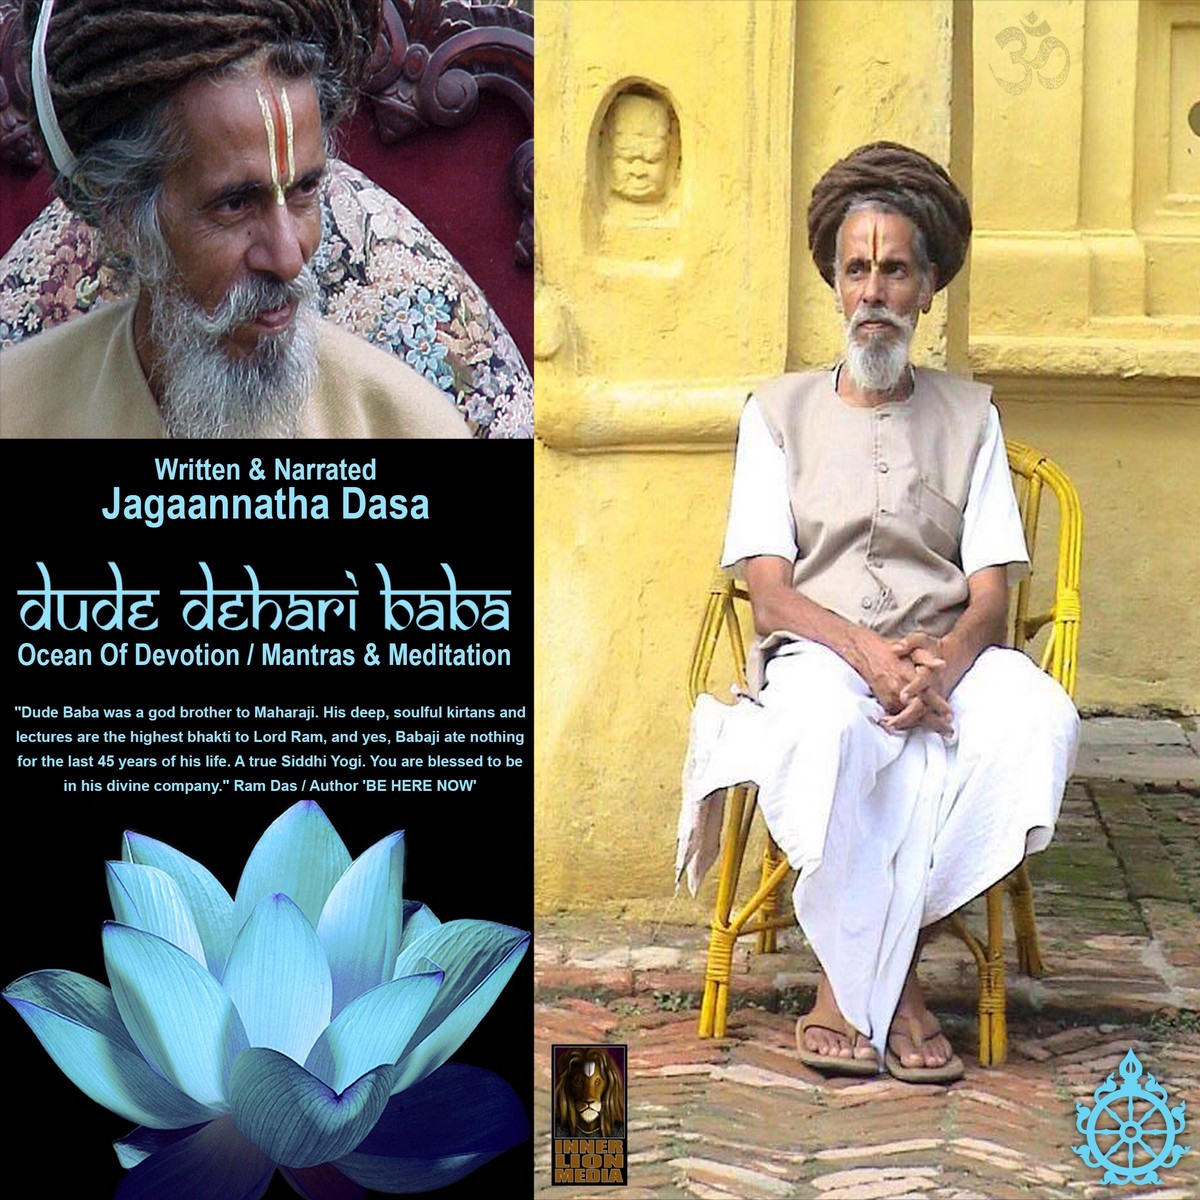 Dude Dehari Baba Ocean Of Devotion – Mantras & Meditation